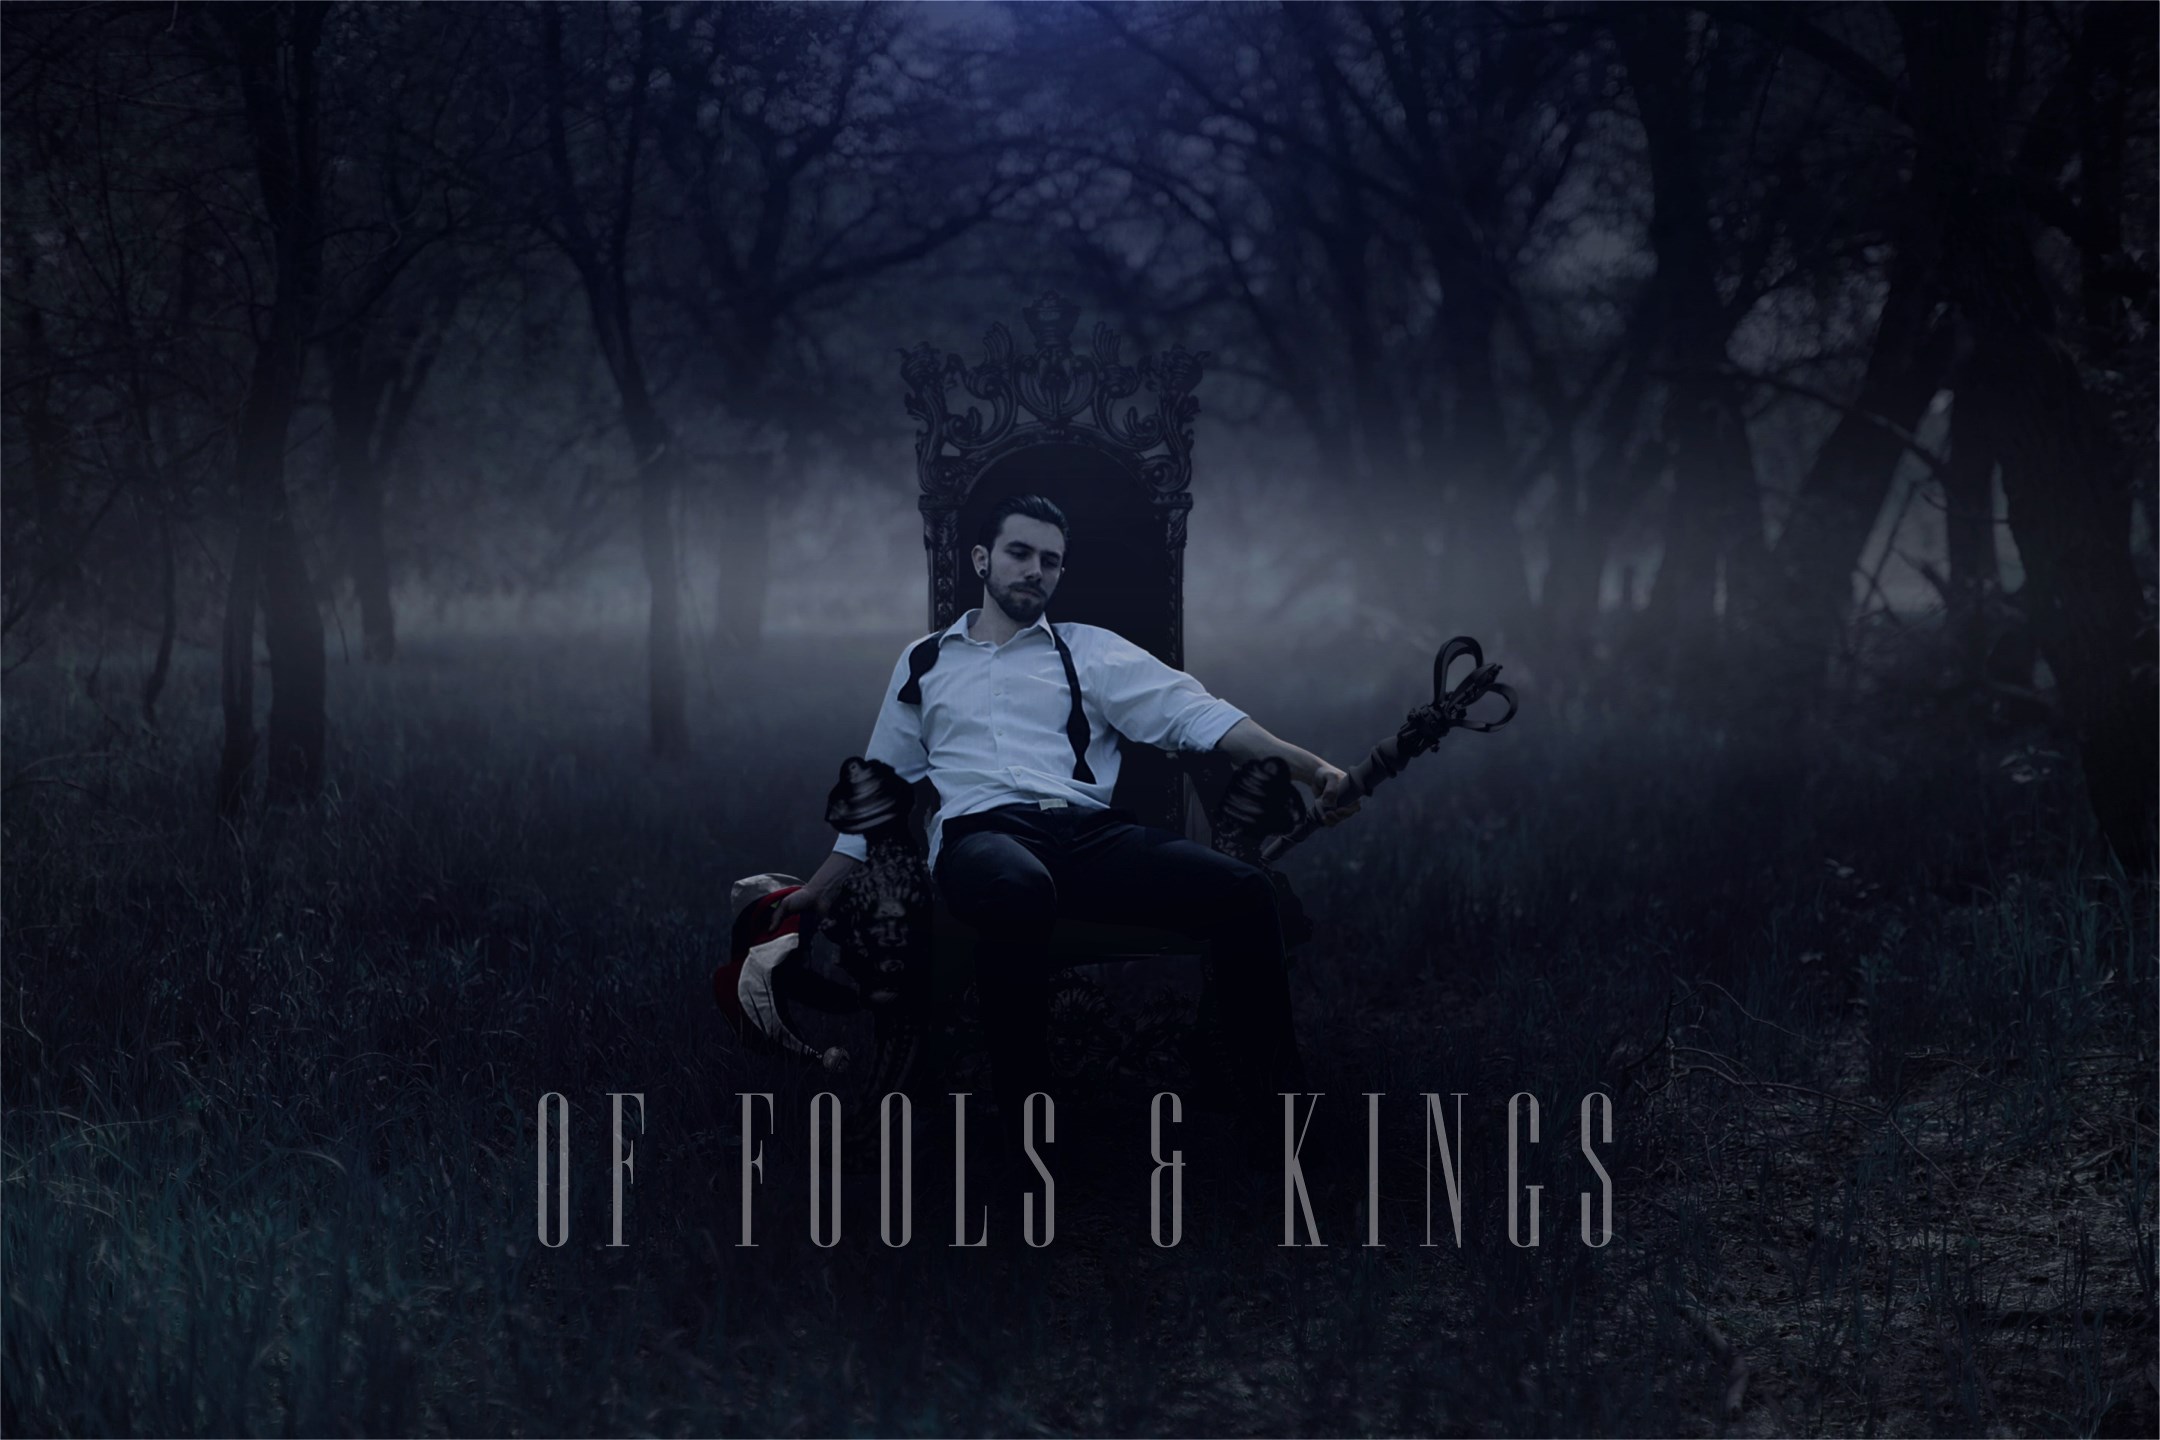 Of Fools & Kings Poster 71dpi